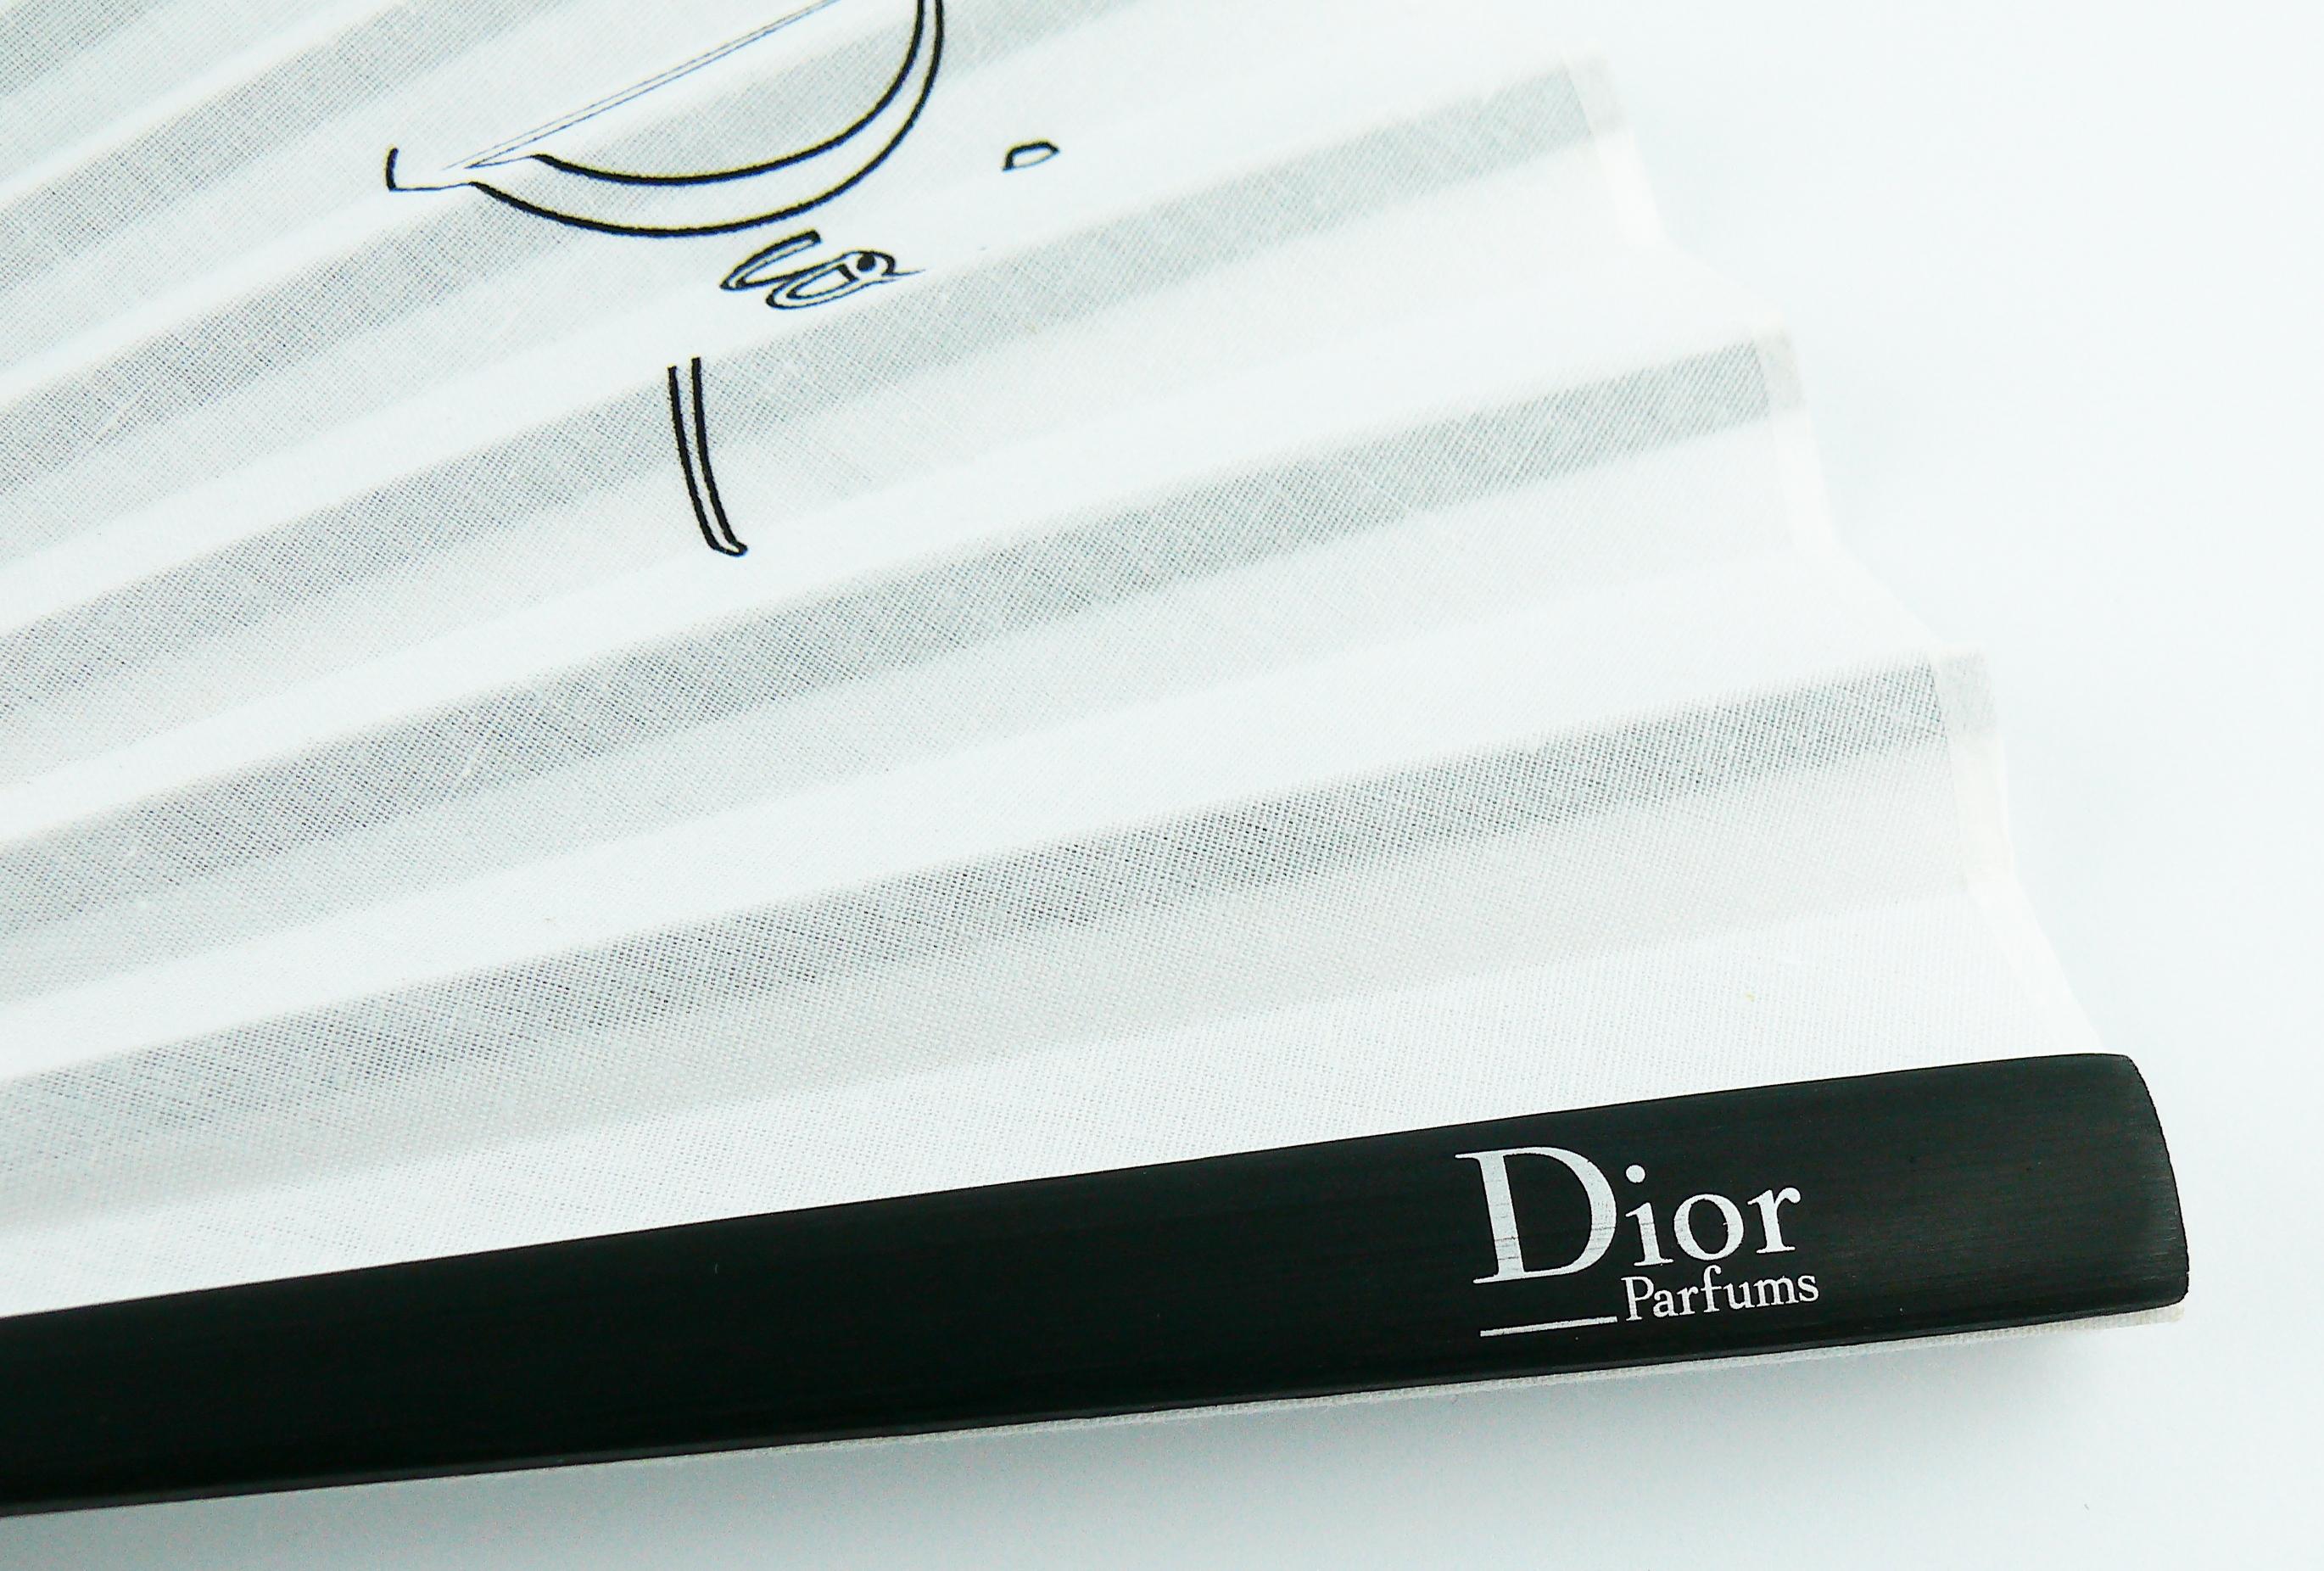 Women's Christian Dior Parfums Promotional Fan